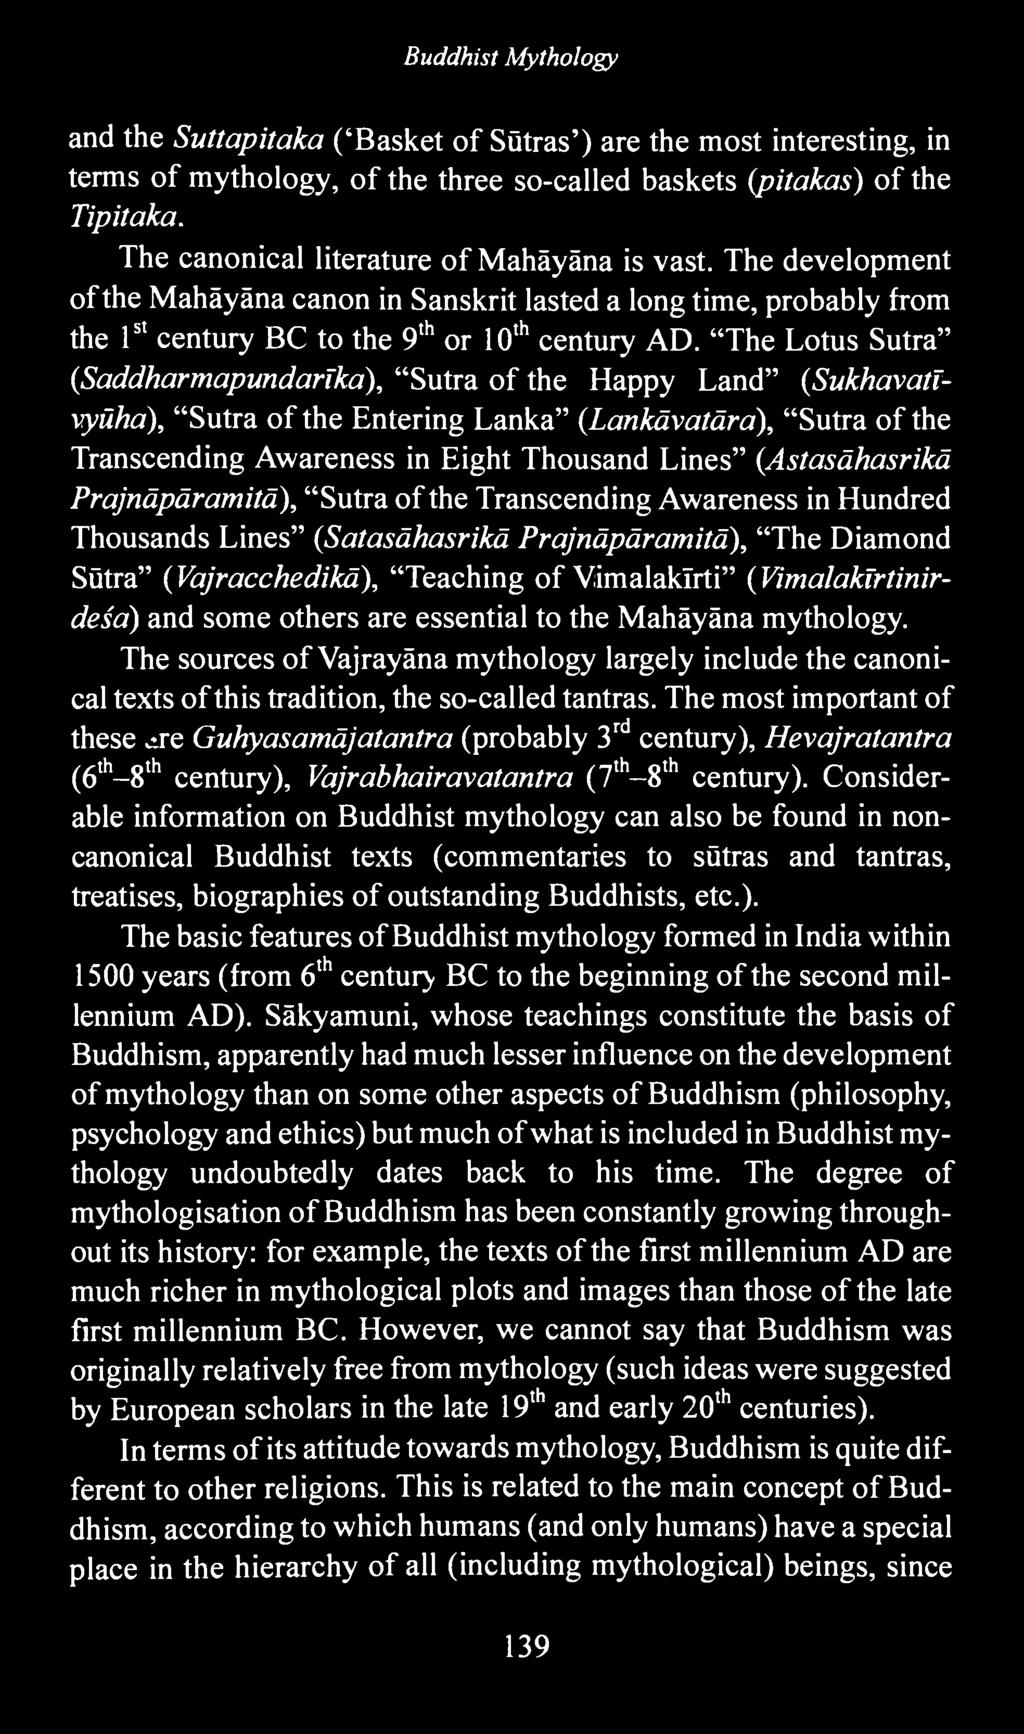 "The Lotus Sutra" (,Saddharmapundarïka), "Sutra of the Happy Land" (Sukhavatlvyüha), "Sutra of the Entering Lanka" (Lankävatära), "Sutra of the Transcending Awareness in Eight Thousand Lines"